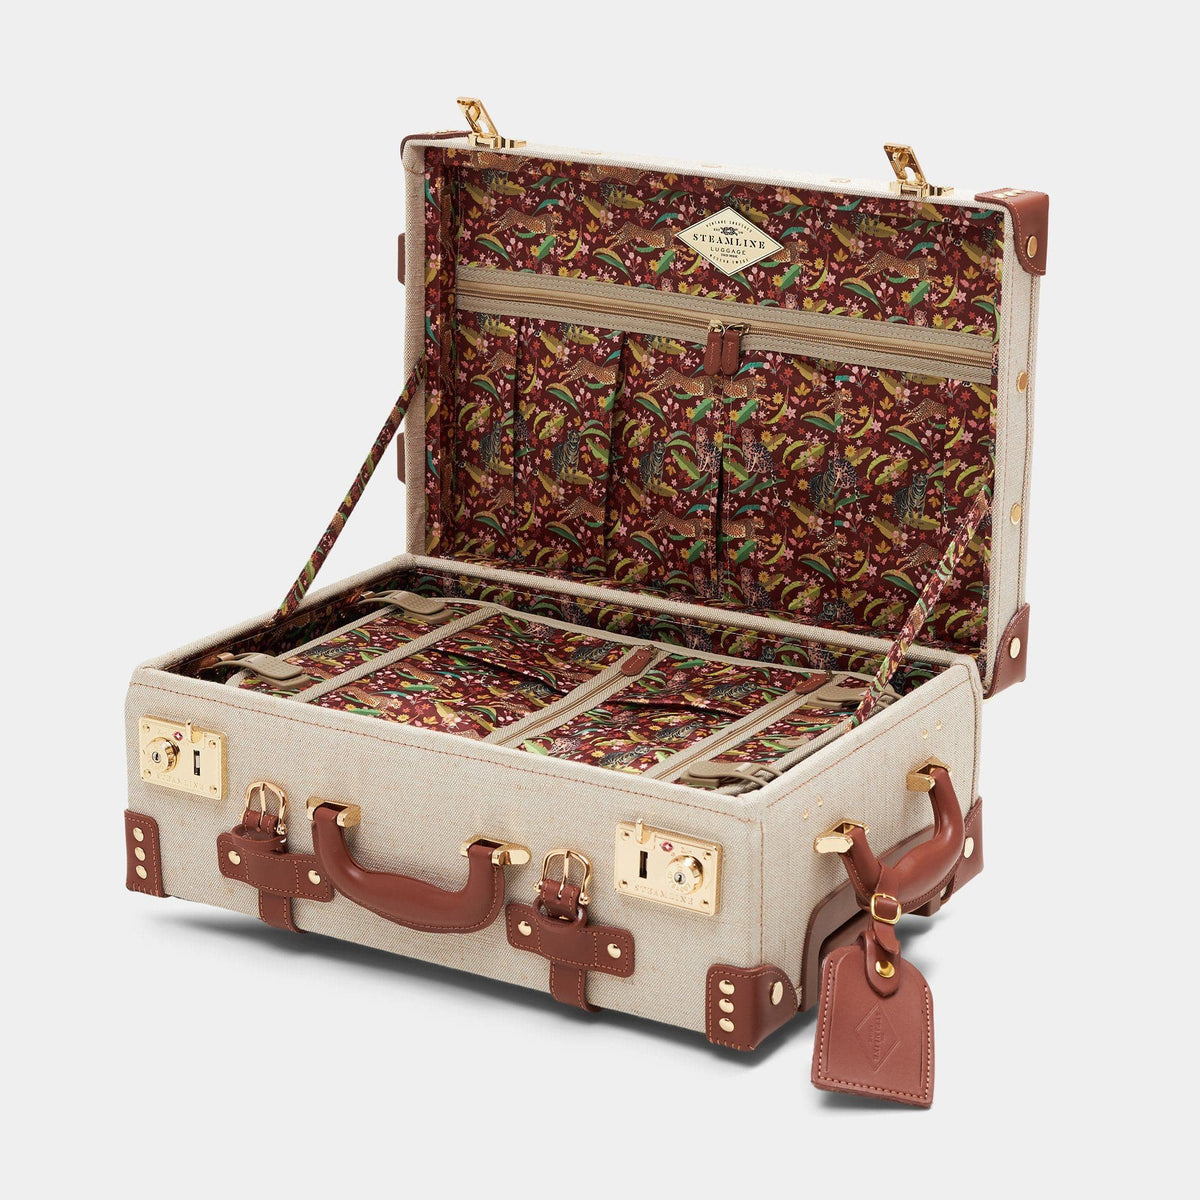 The Editor - Brown Carryon Carryon Steamline Luggage 